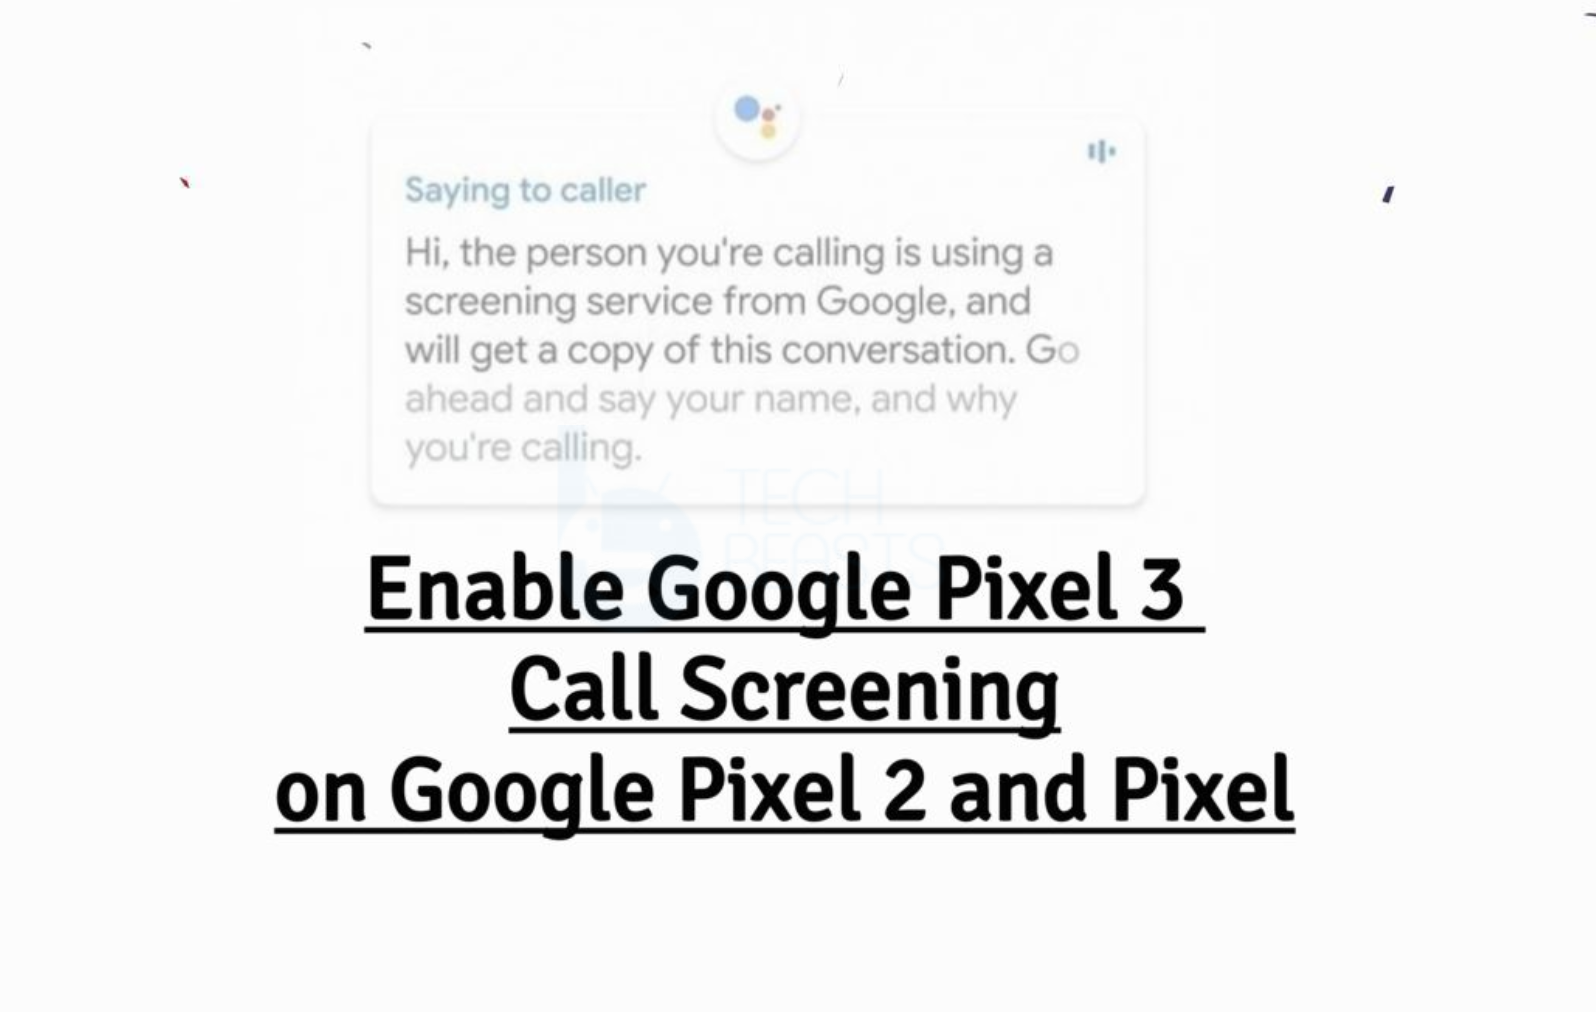 Google Pixel 3 Call Screening on Pixel 2